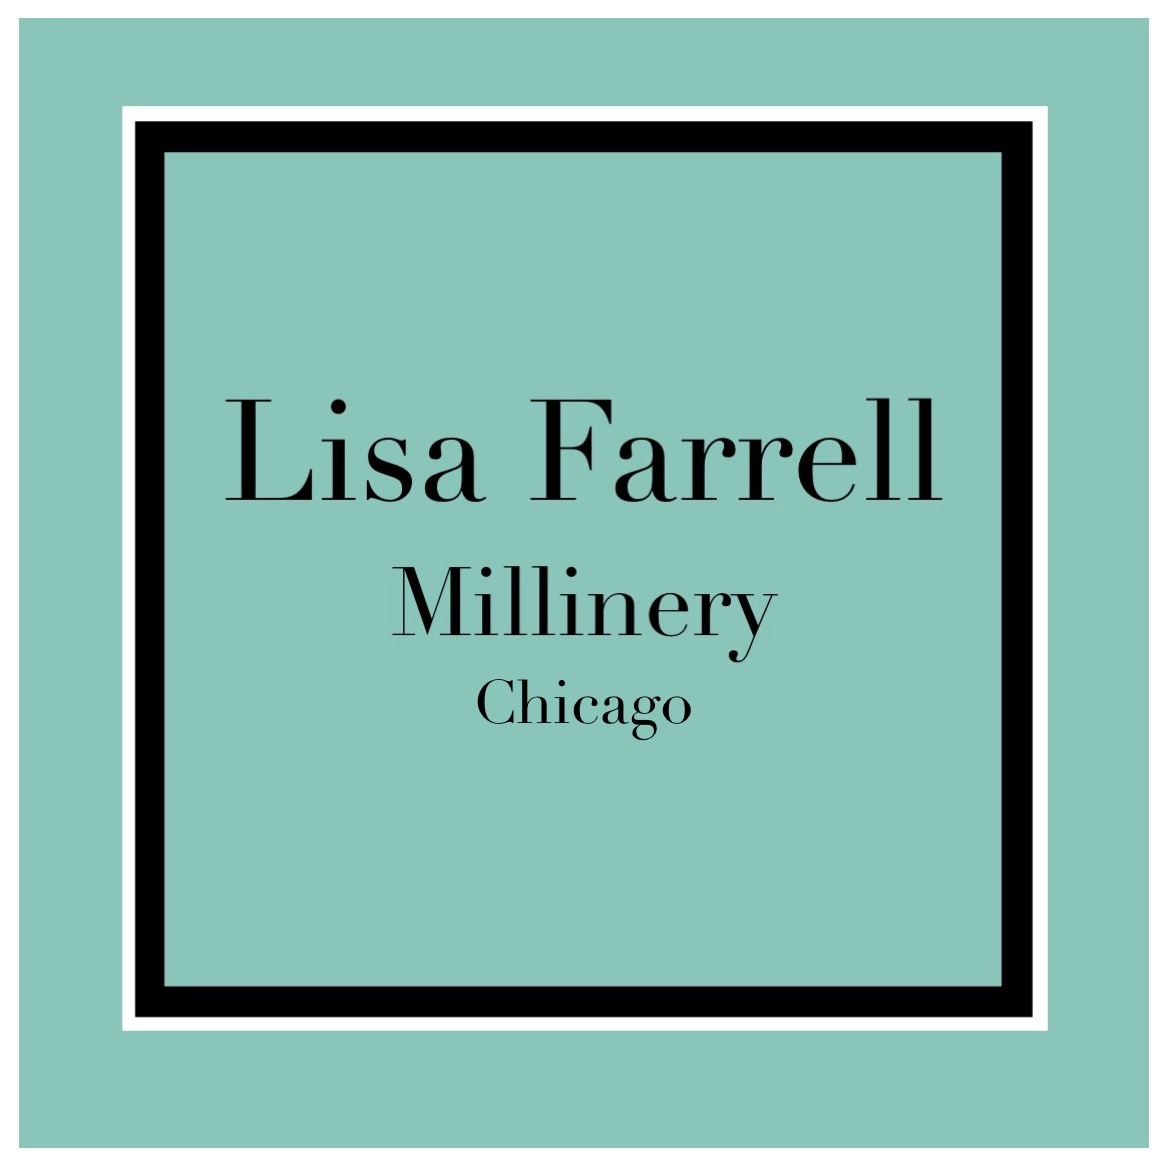 Lisa Farrell Millinery